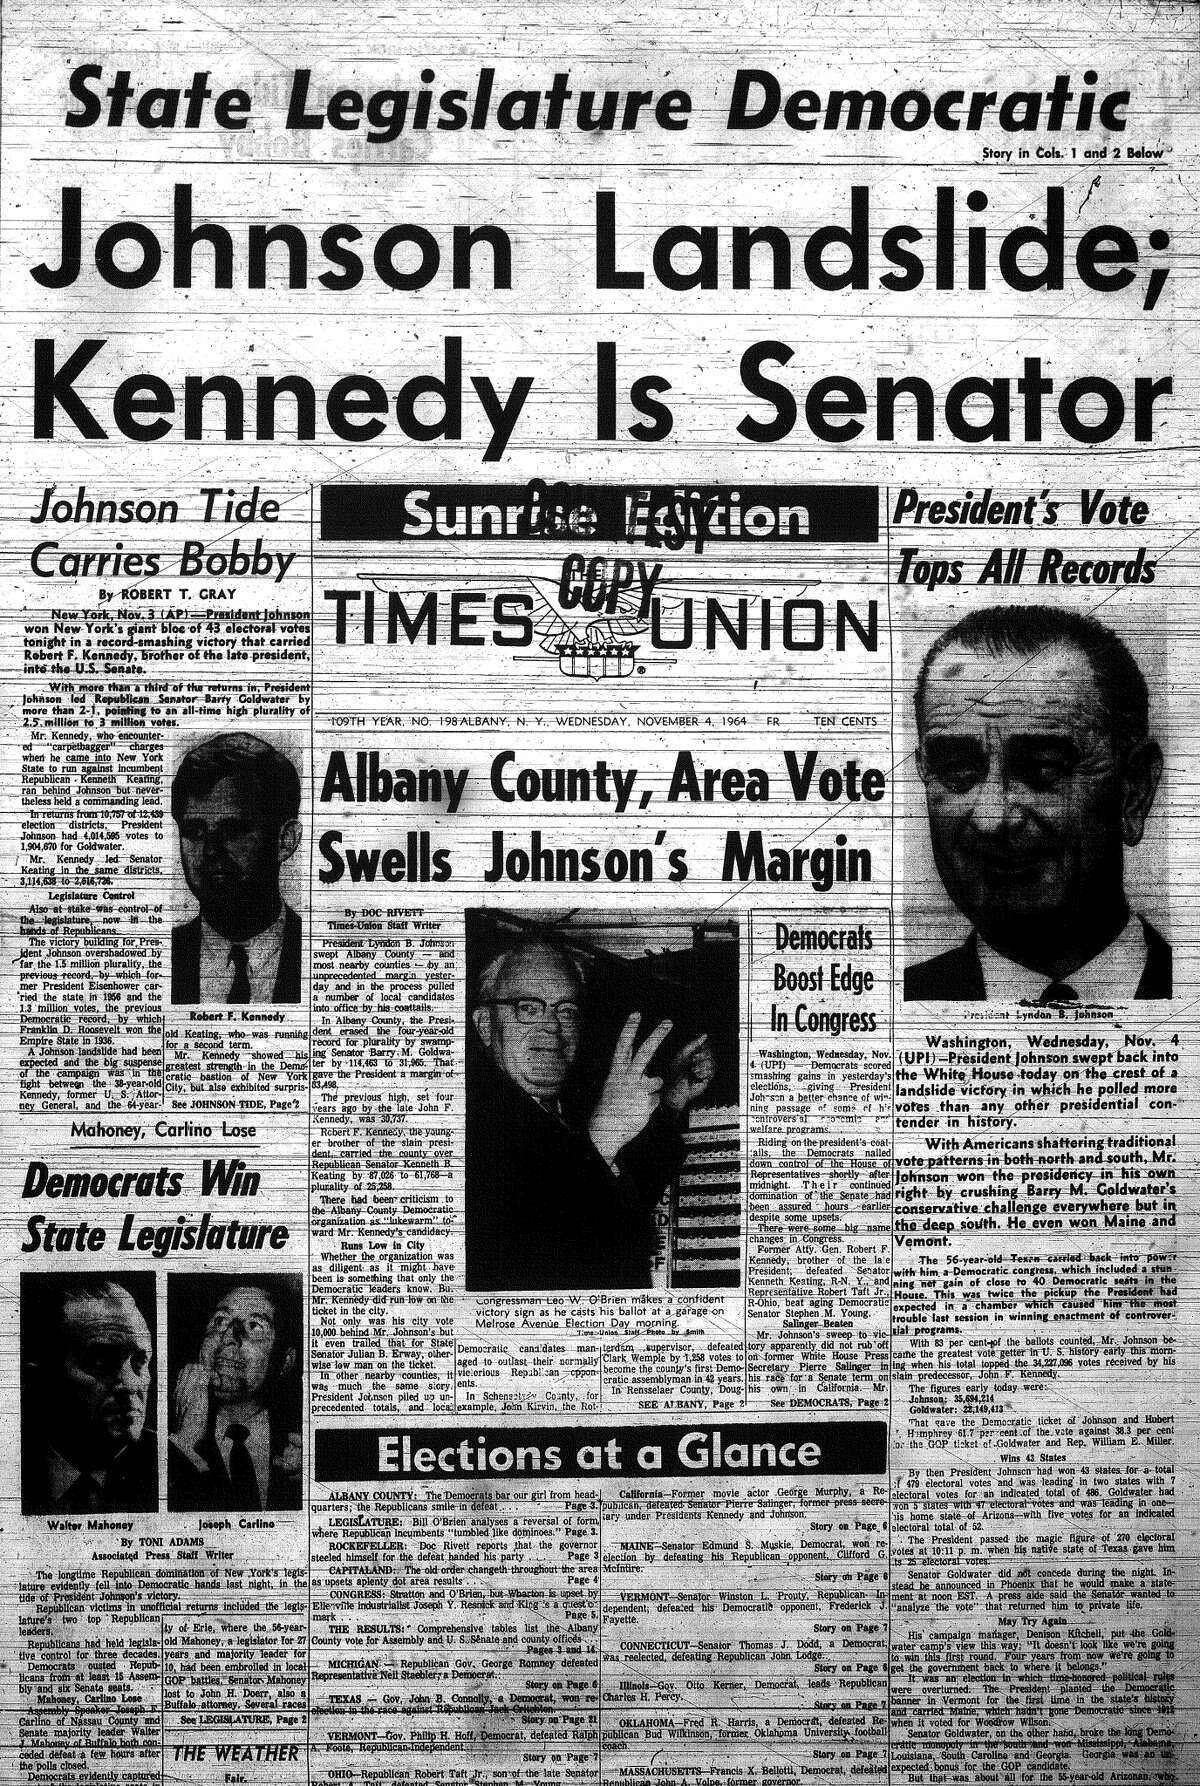 "Johnson landslide; Kennedy is senator"